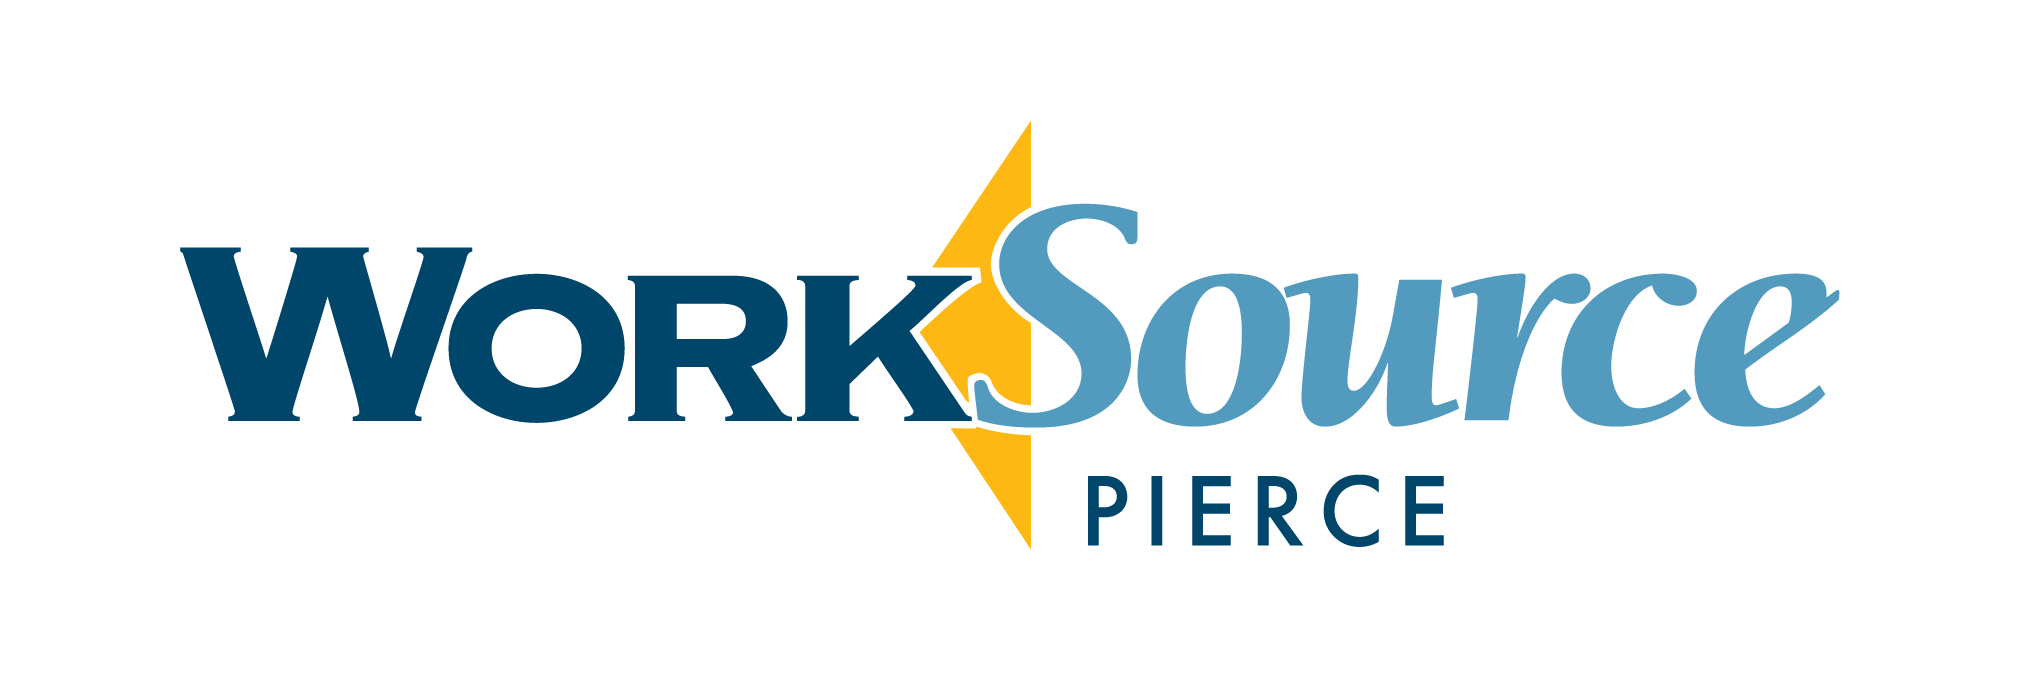 WorkSource Pierce